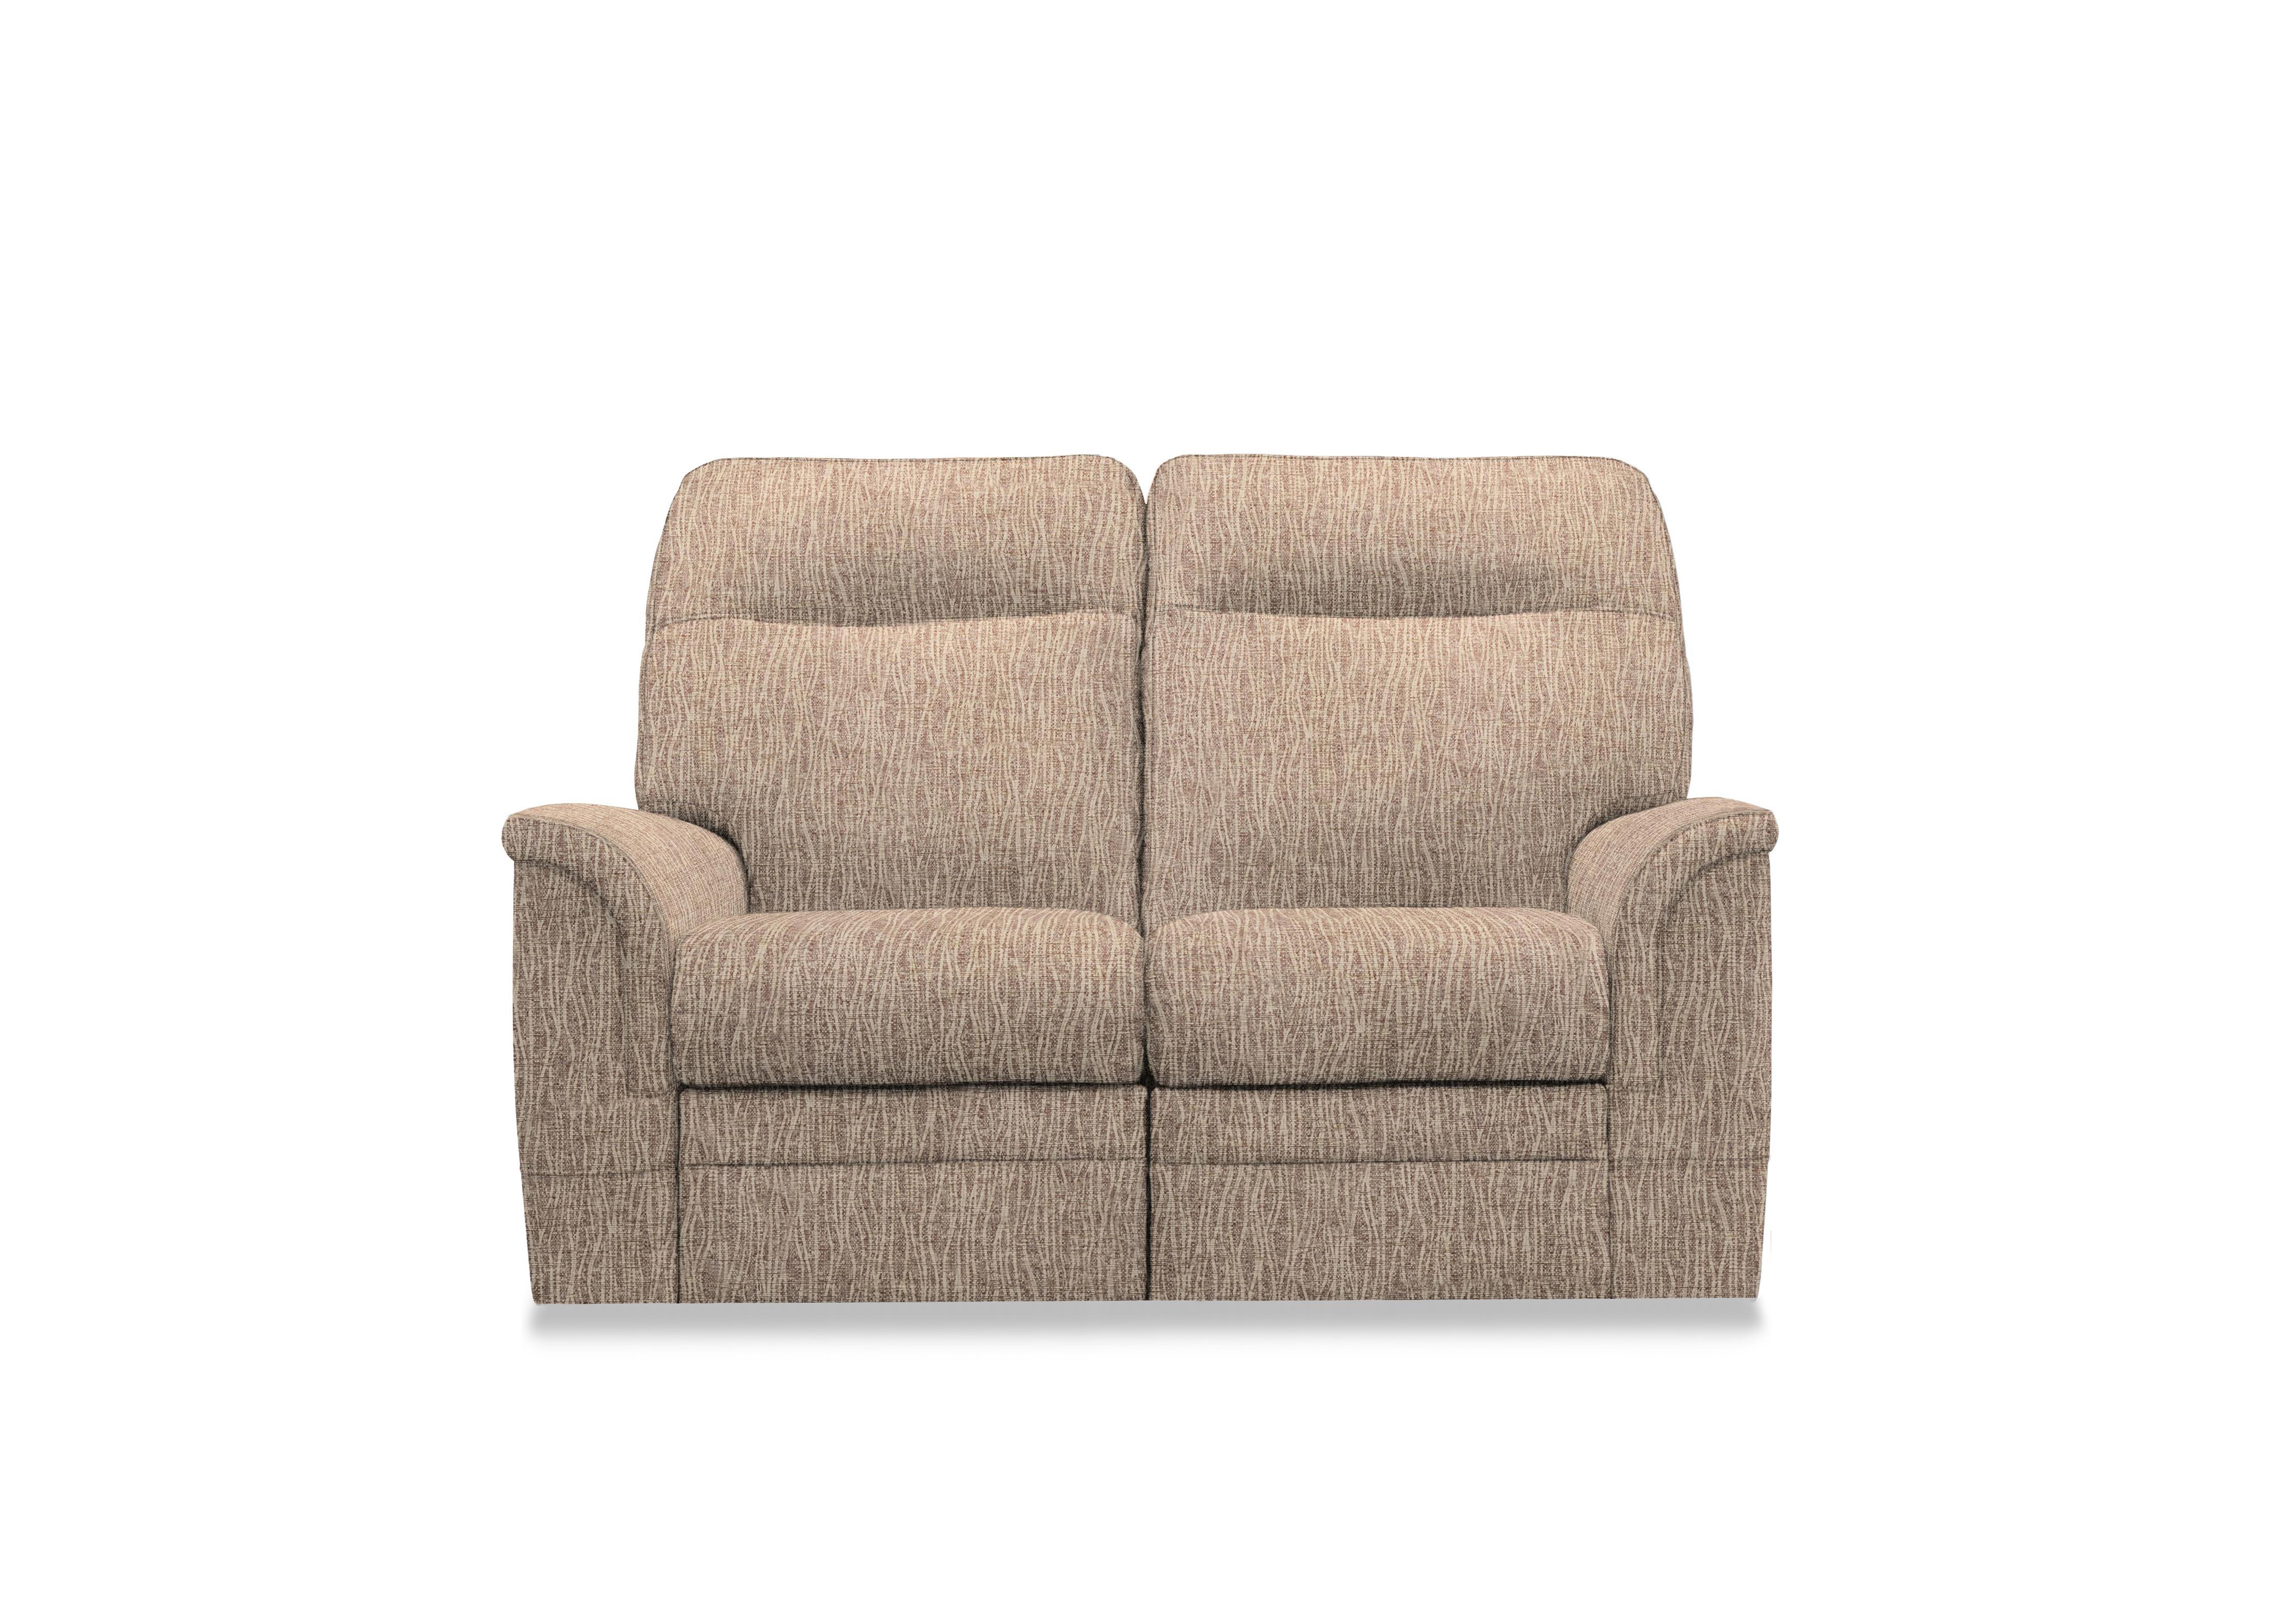 Hudson 23 Fabric 2 Seater Sofa in Dune Sand 001482-0054 on Furniture Village